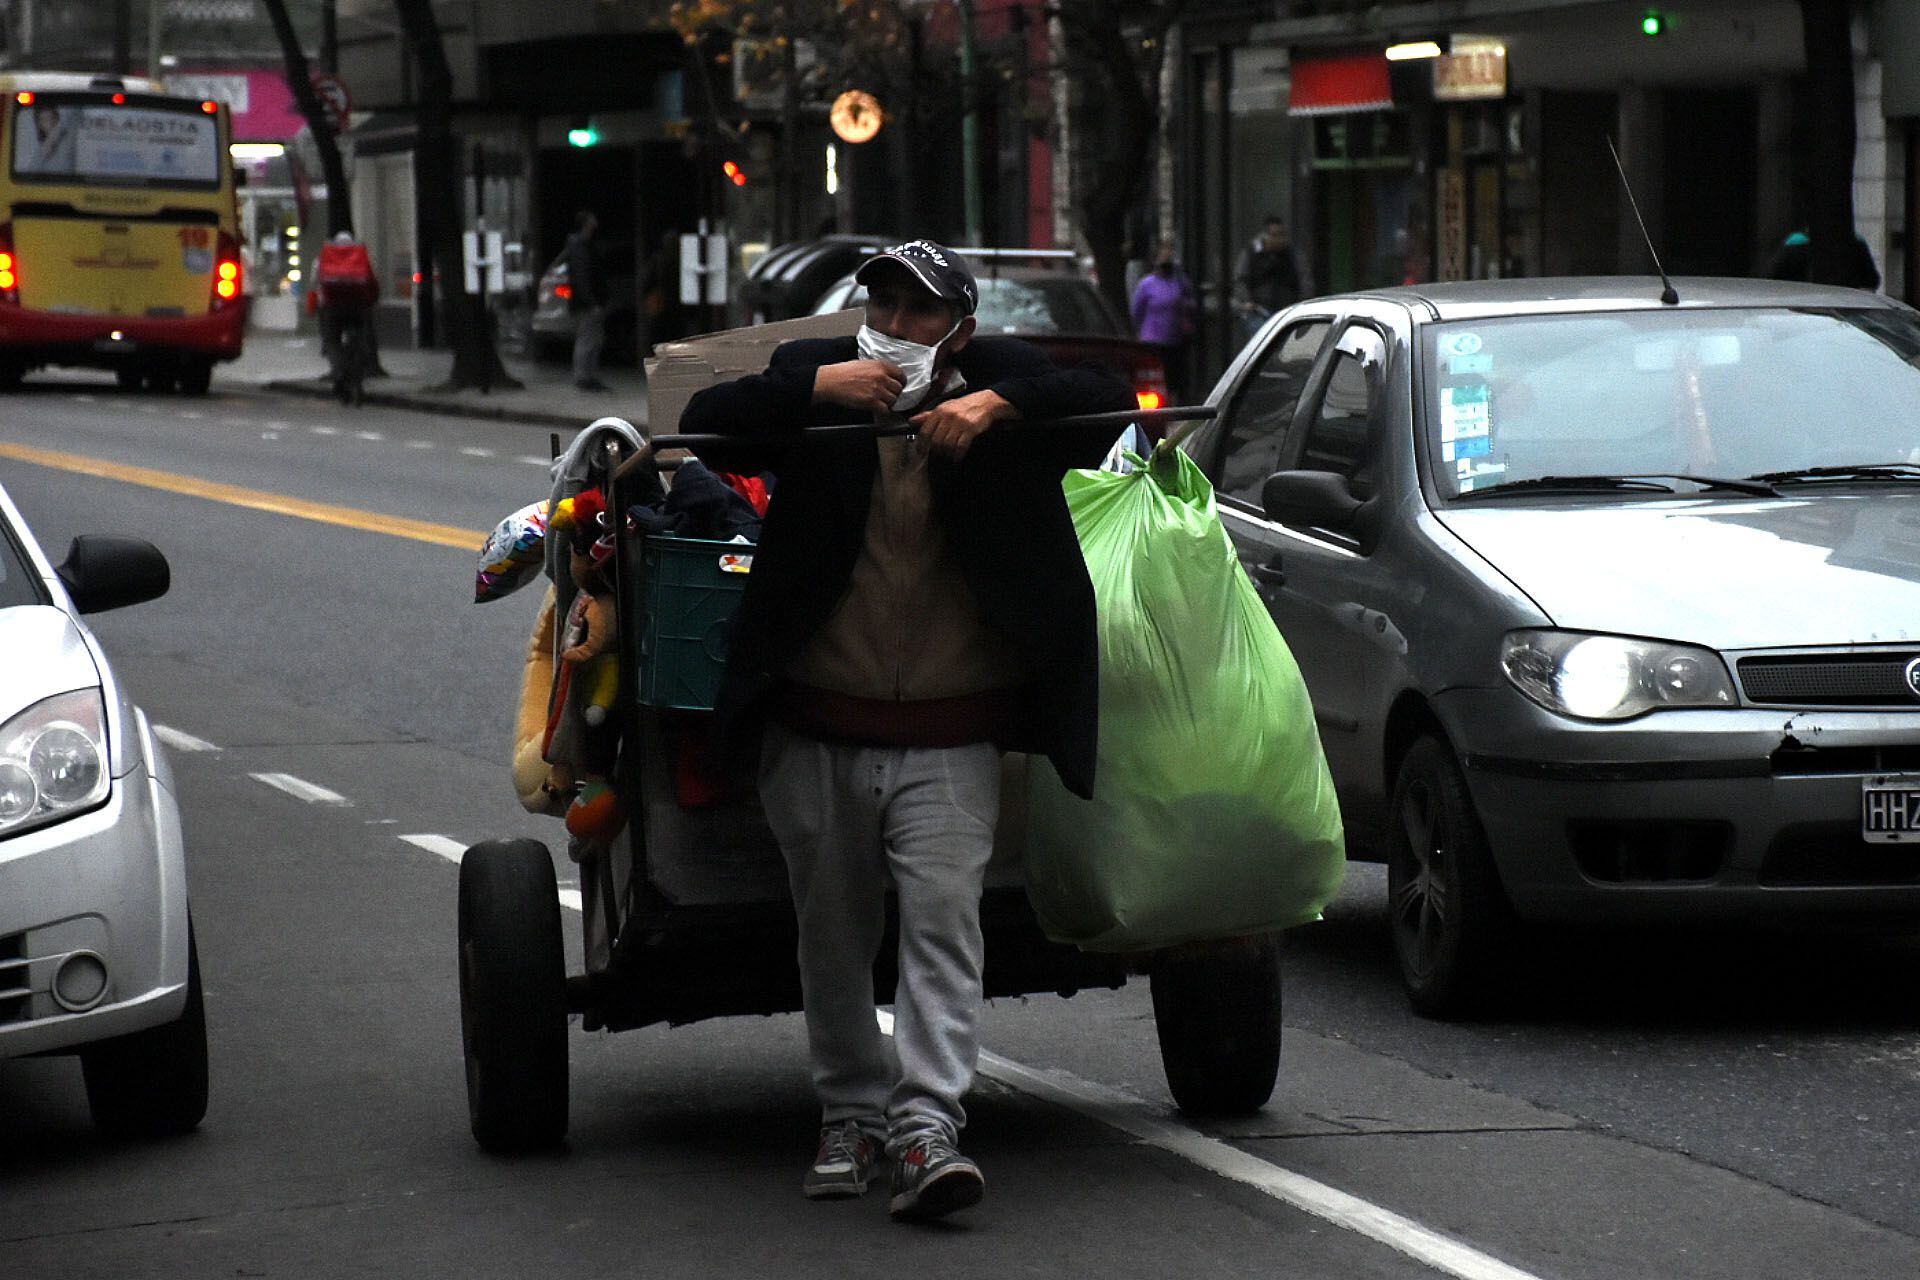 Personas en situación de calle - coronavirus - argentina - cuarentena - pobreza